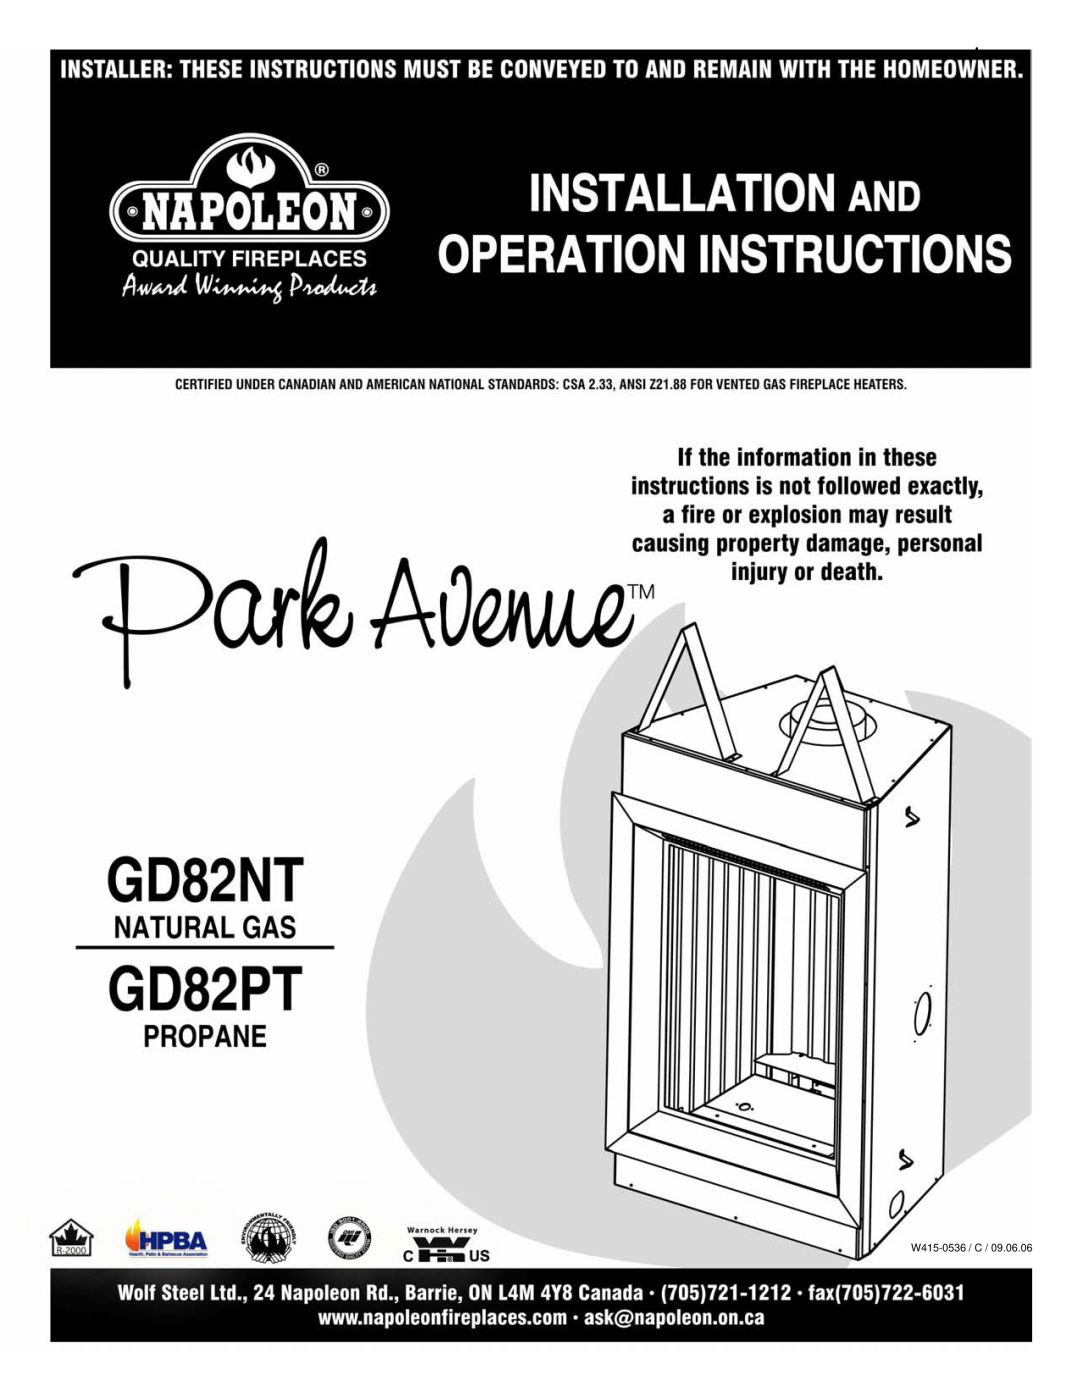 Napoleon Fireplaces GD82NT, GD82PT manual W415-0536 /C 